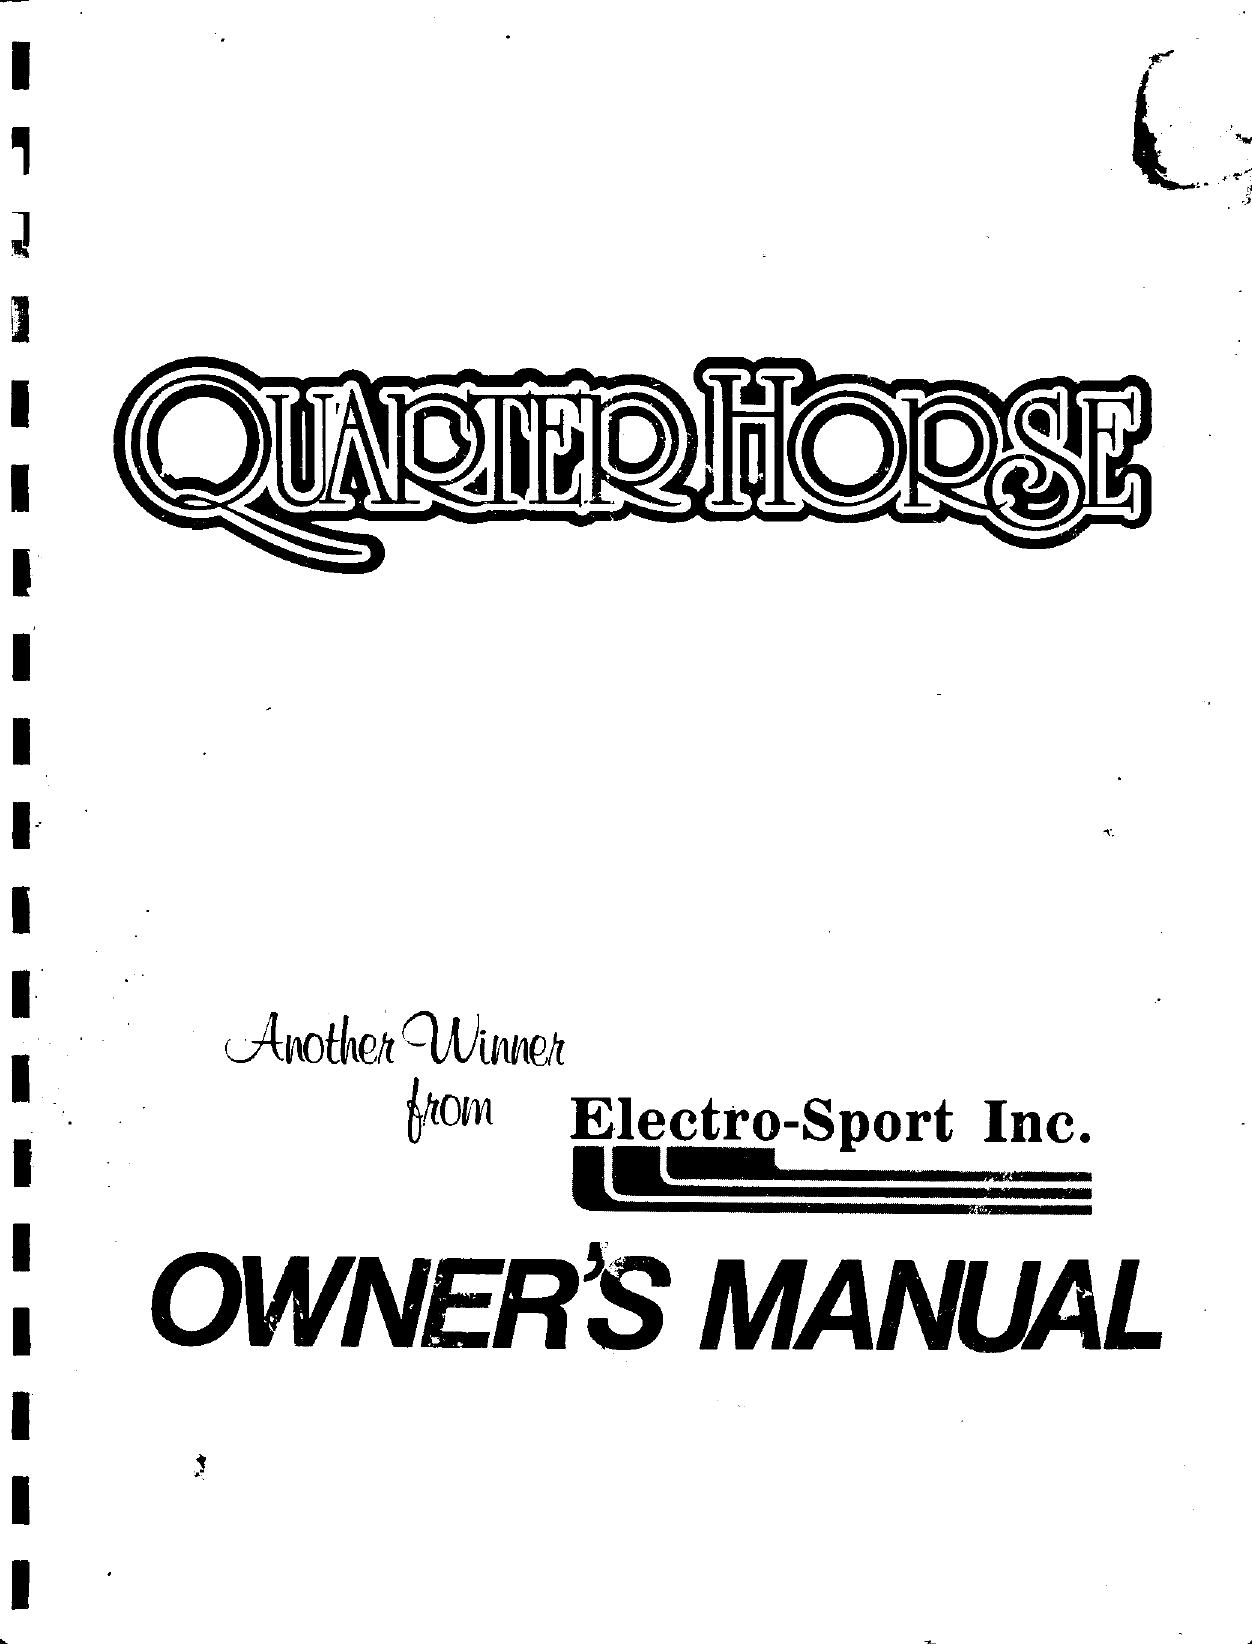 Quarterhorse (Owner's) (U)